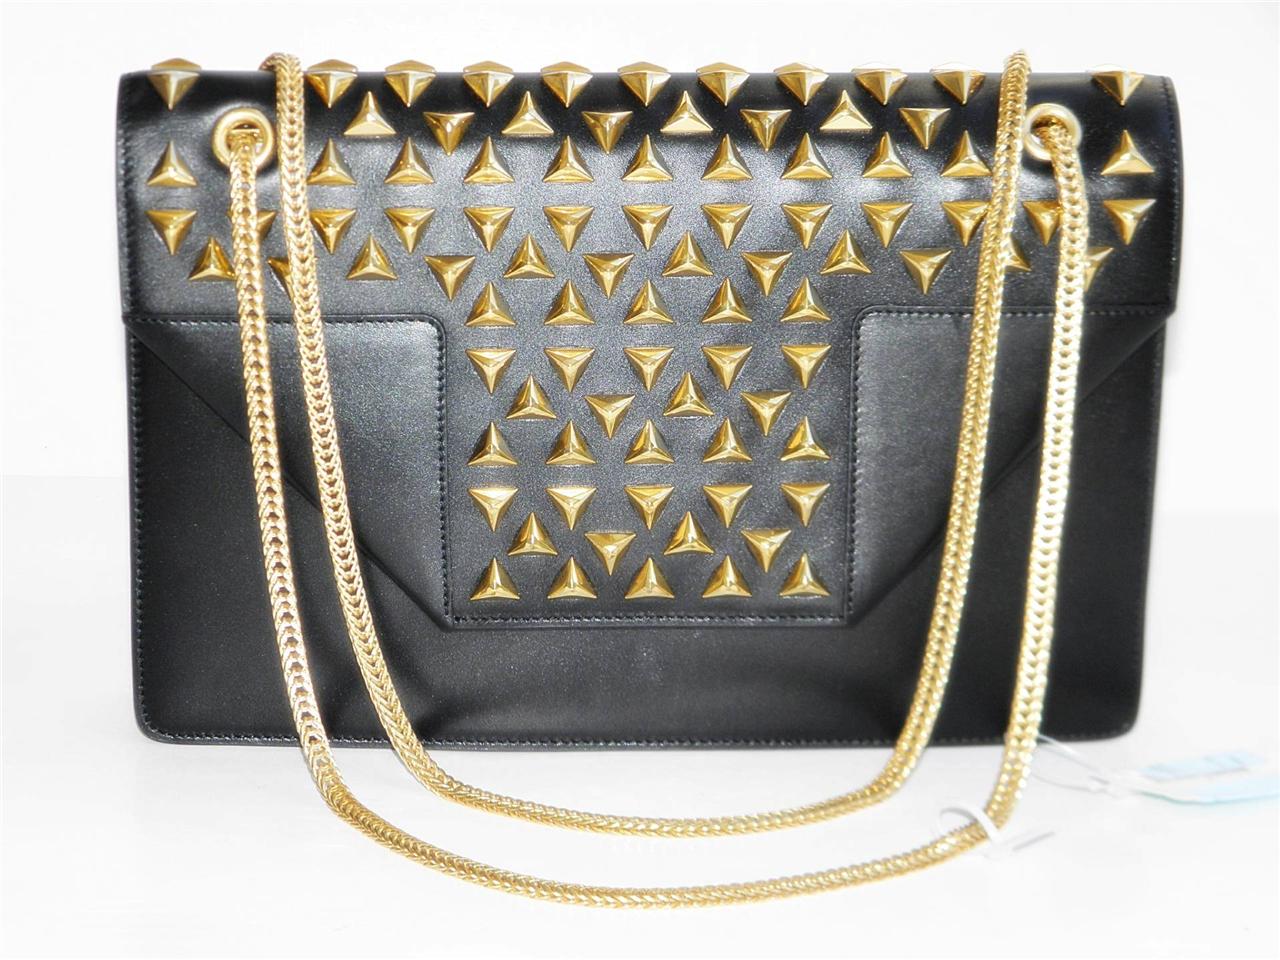 YSL SAINT LAURENT Black Leather Betty Studded Chain Shoulder Bag Handbag | eBay